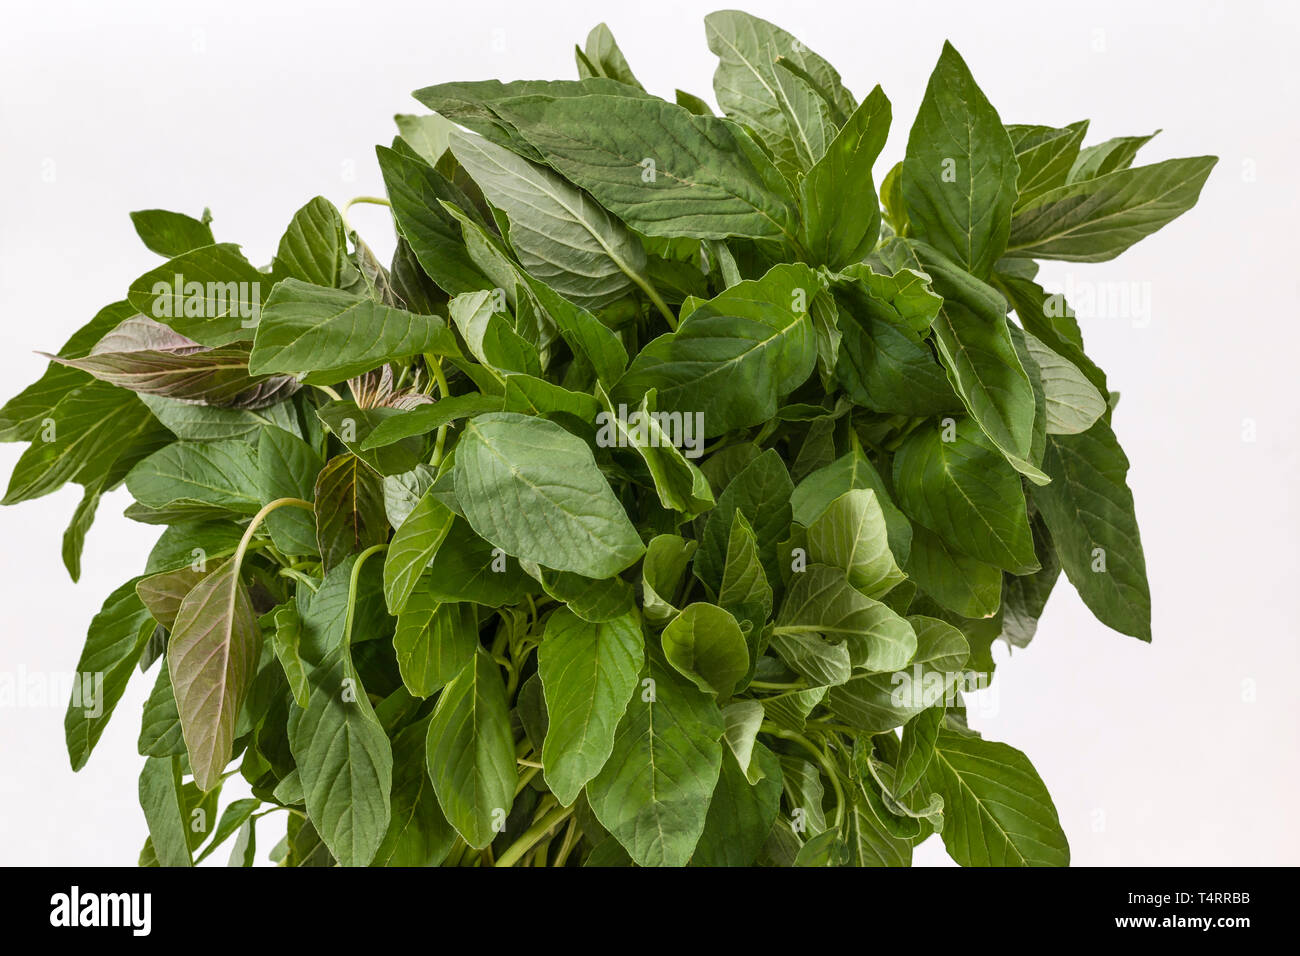 Bunch of Green Amaranth leaves (Amaranthus viridis) on a white background Stock Photo